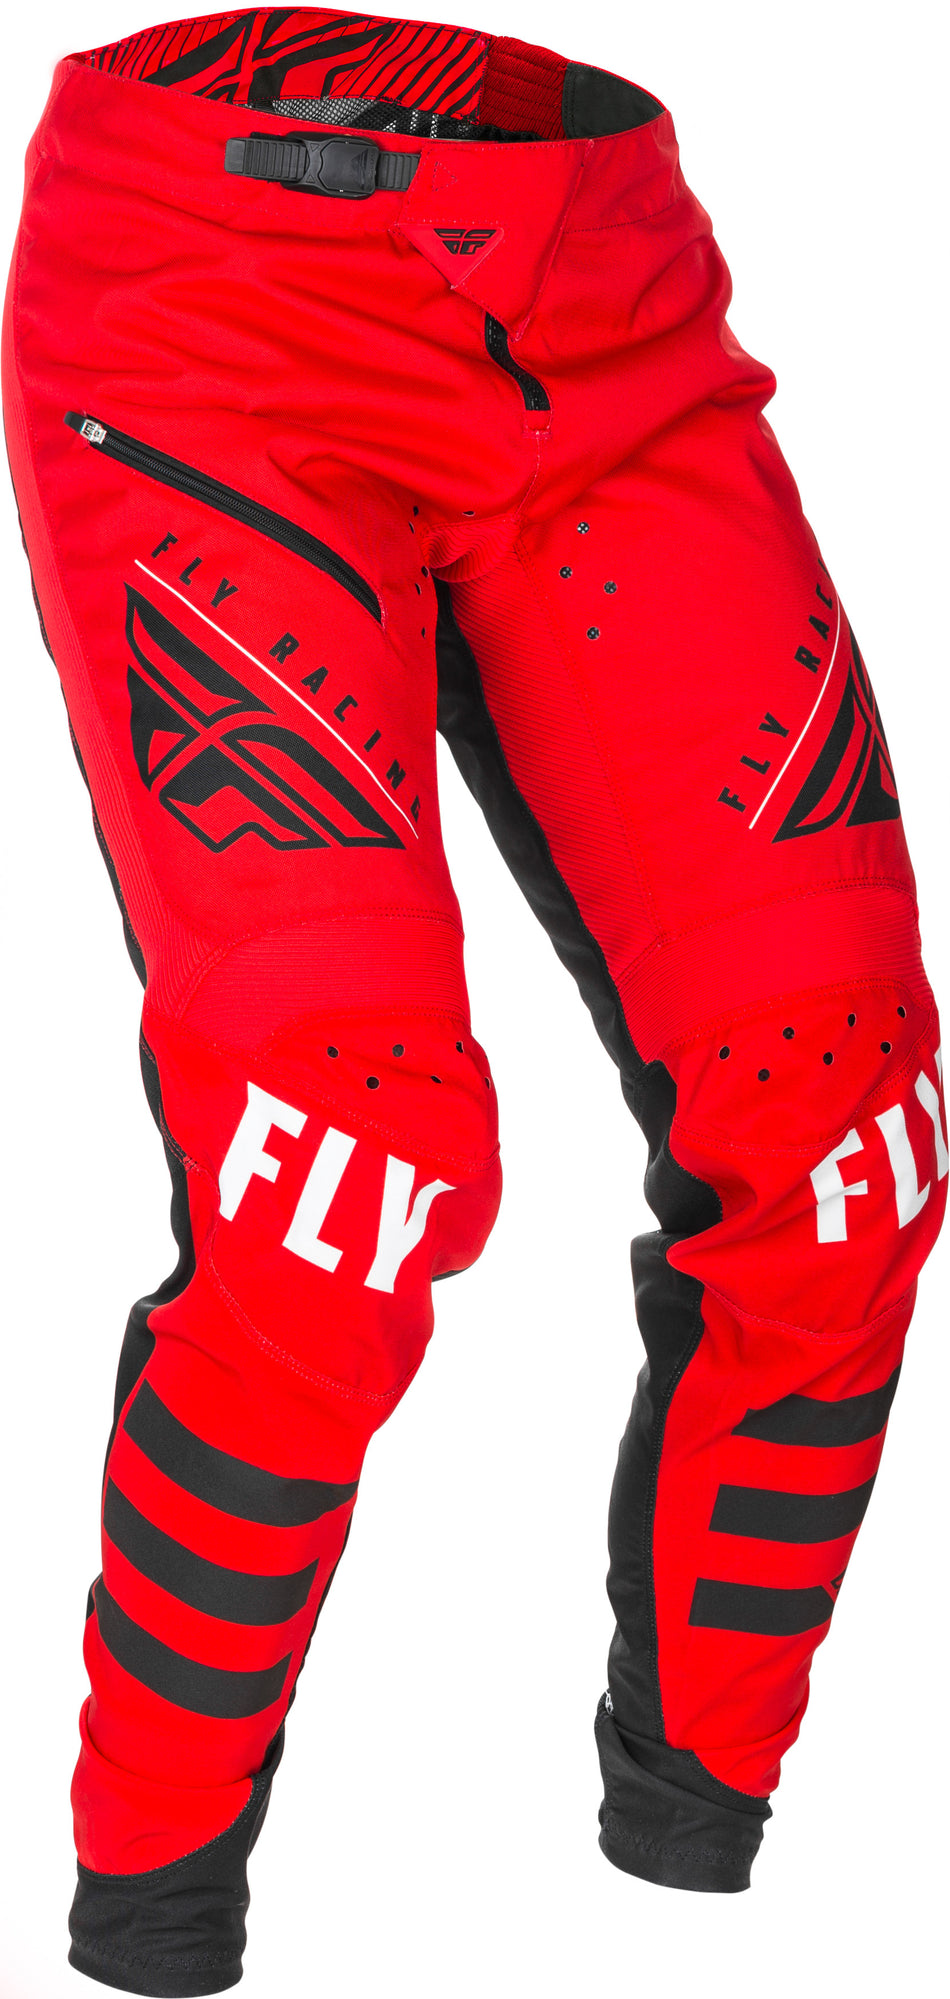 FLY RACING Kinetic Bicycle Pants Red/Black Sz 32 373-04232